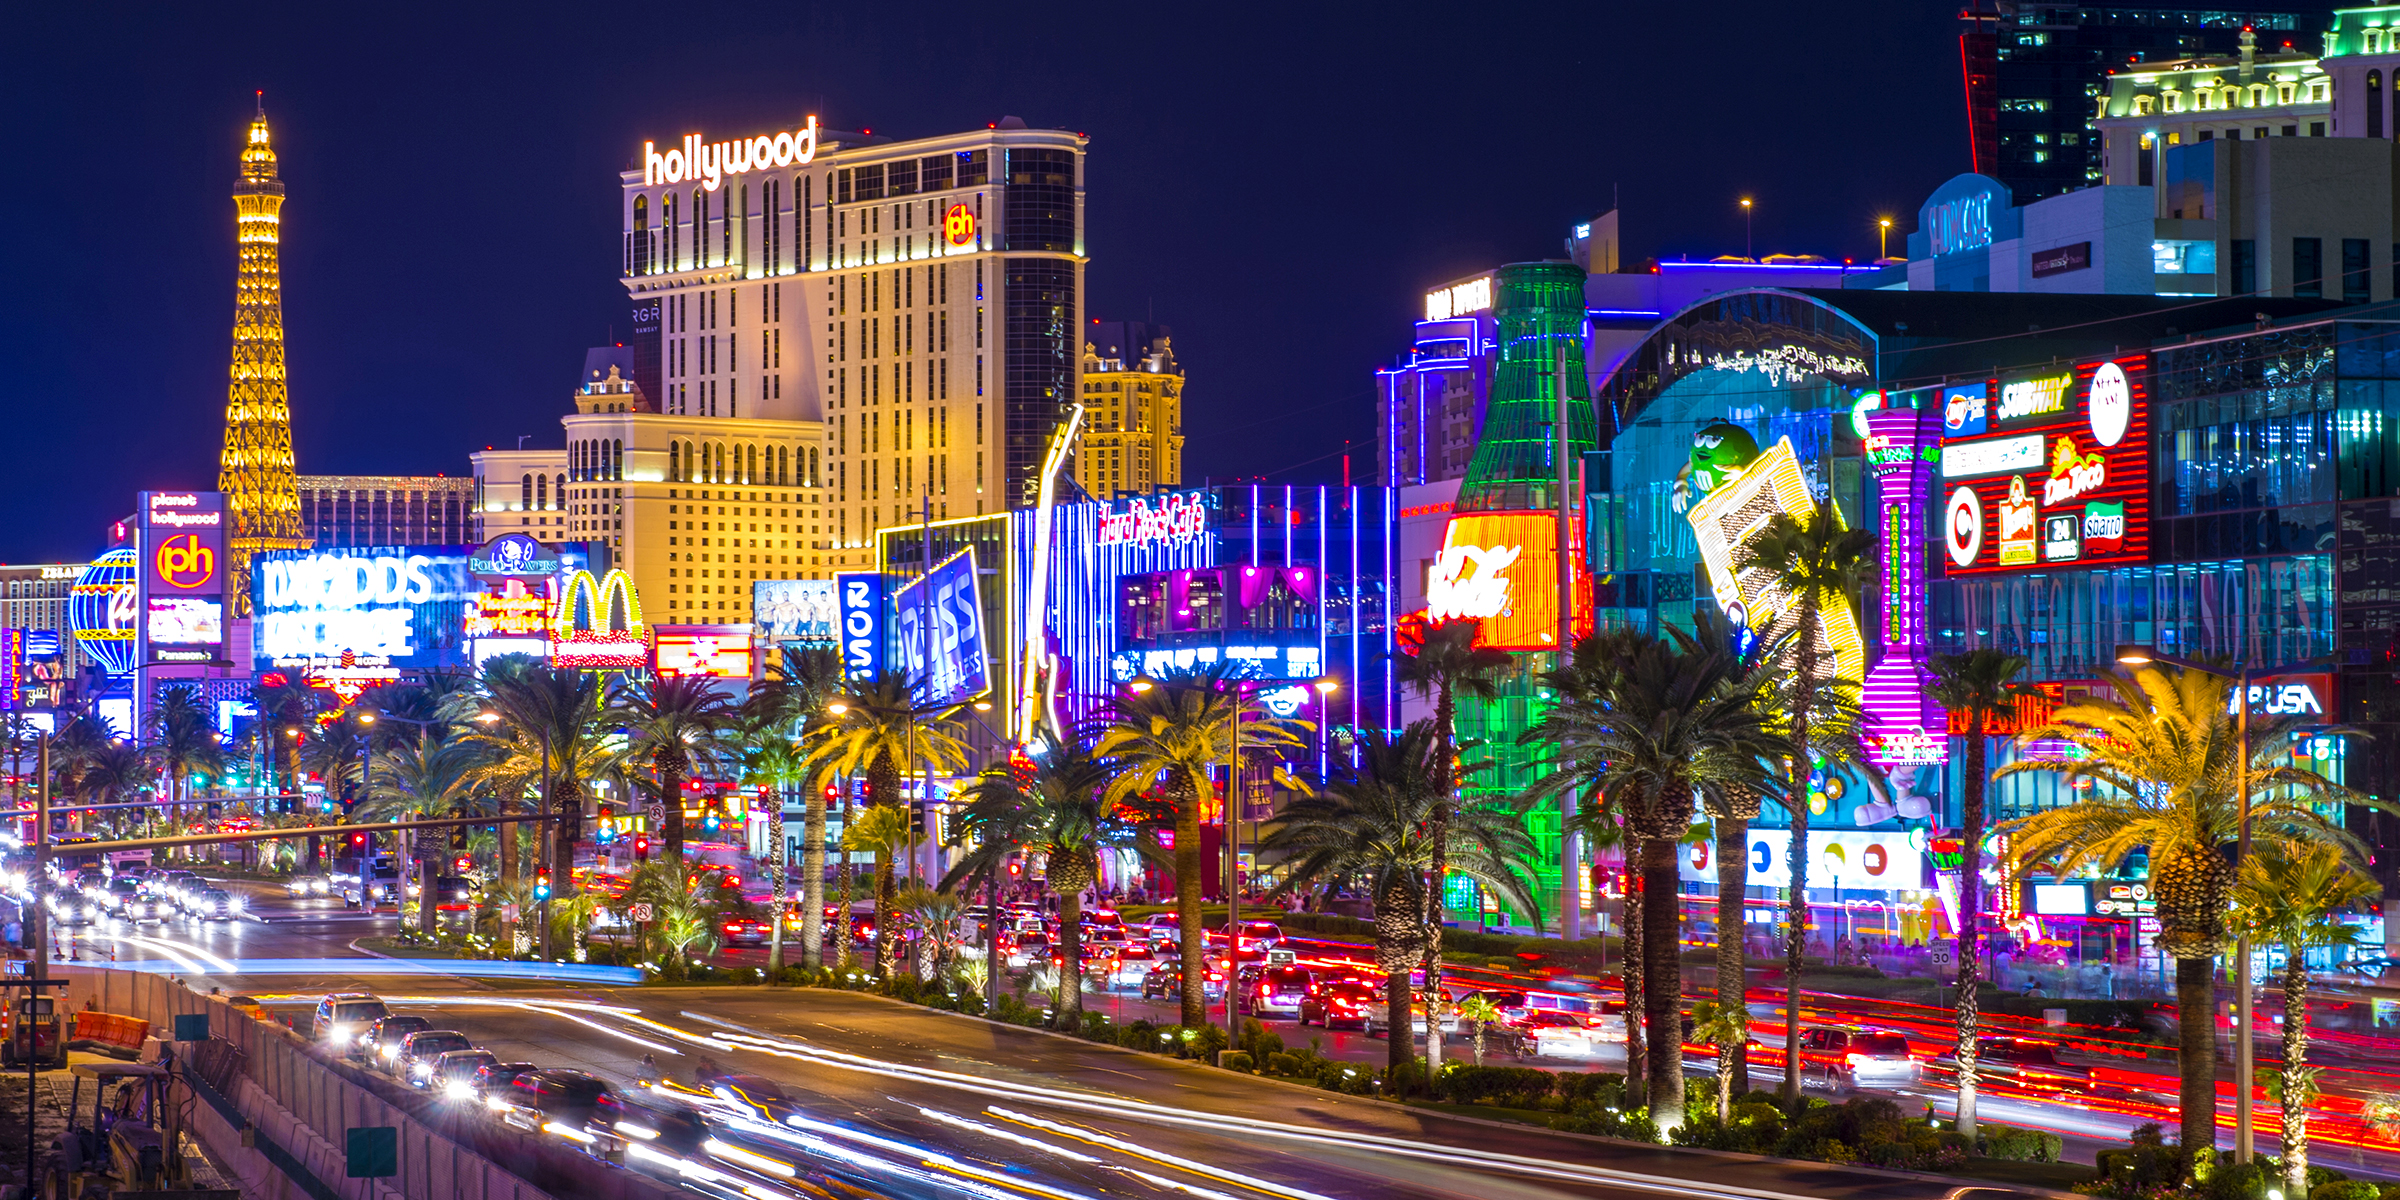 Bright lights in Las Vegas, Nevada | Source: Shutterstock